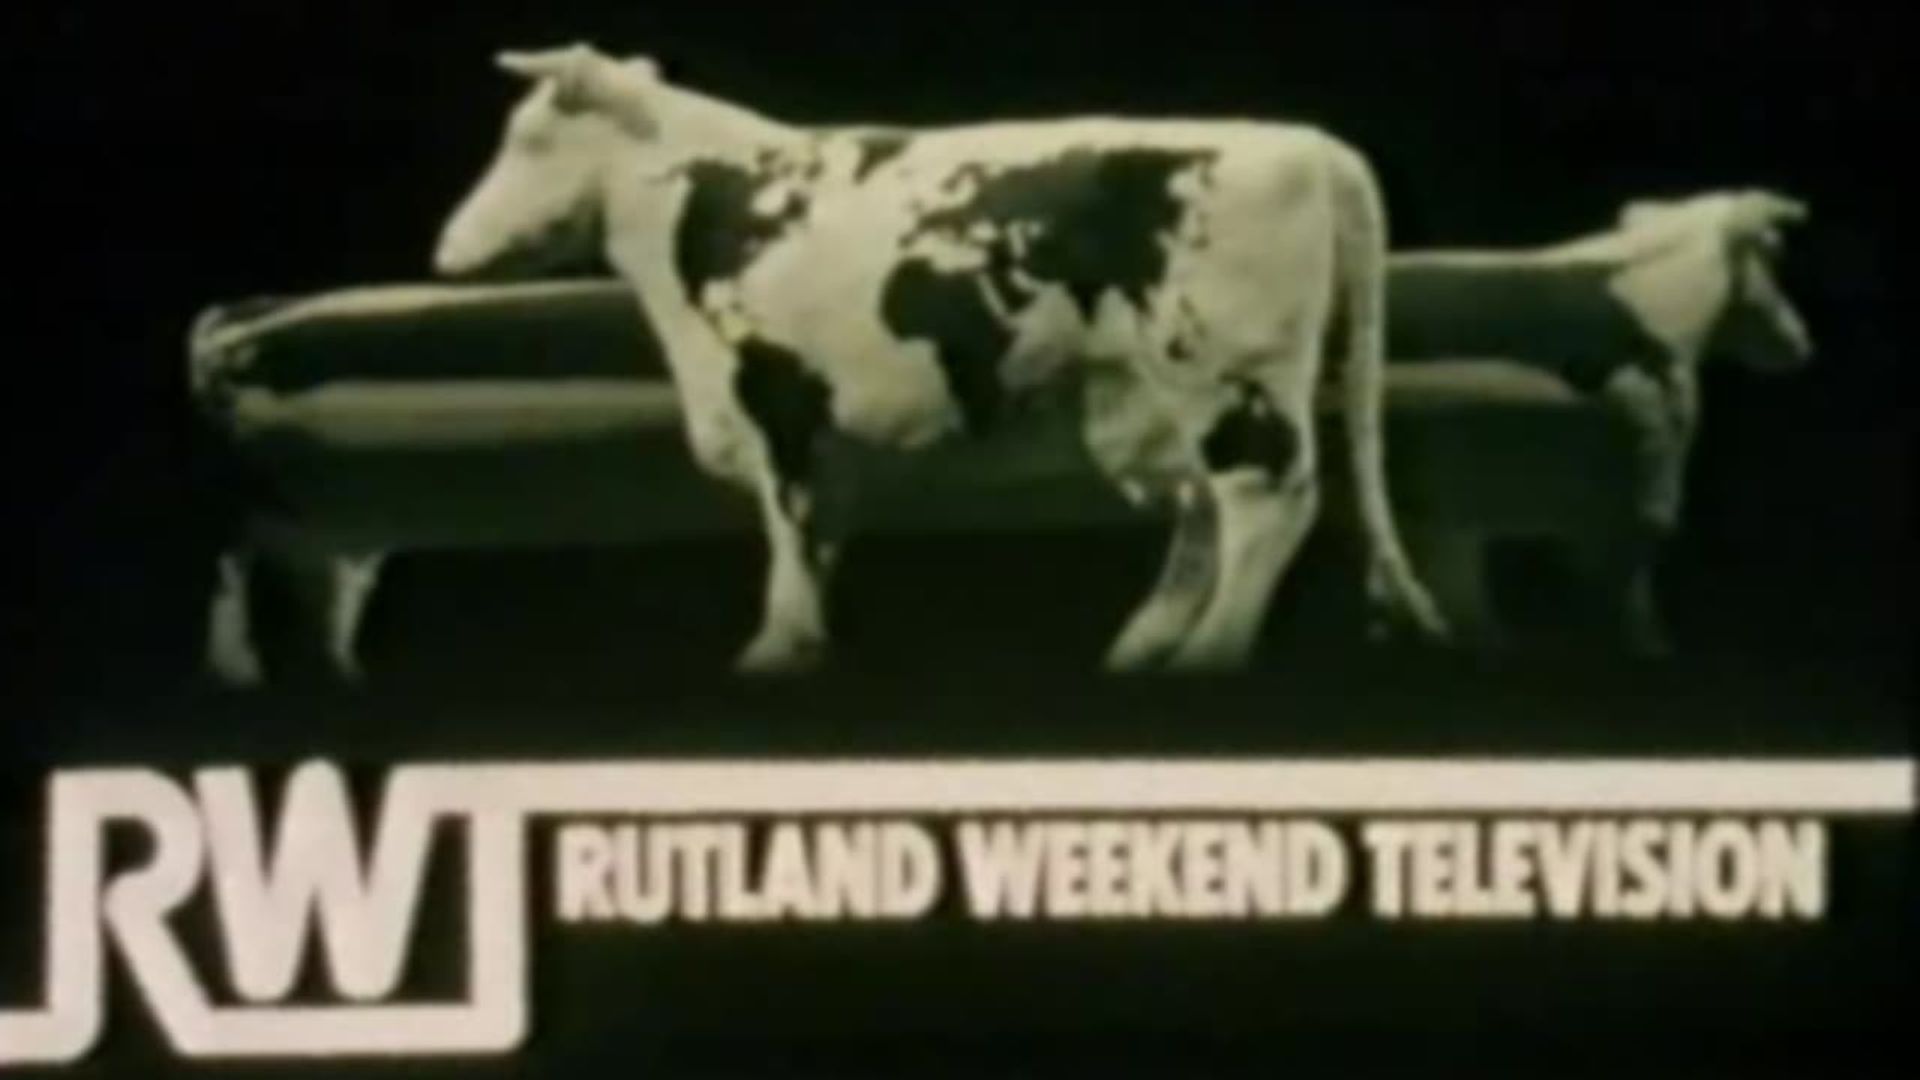 Rutland Weekend Television background